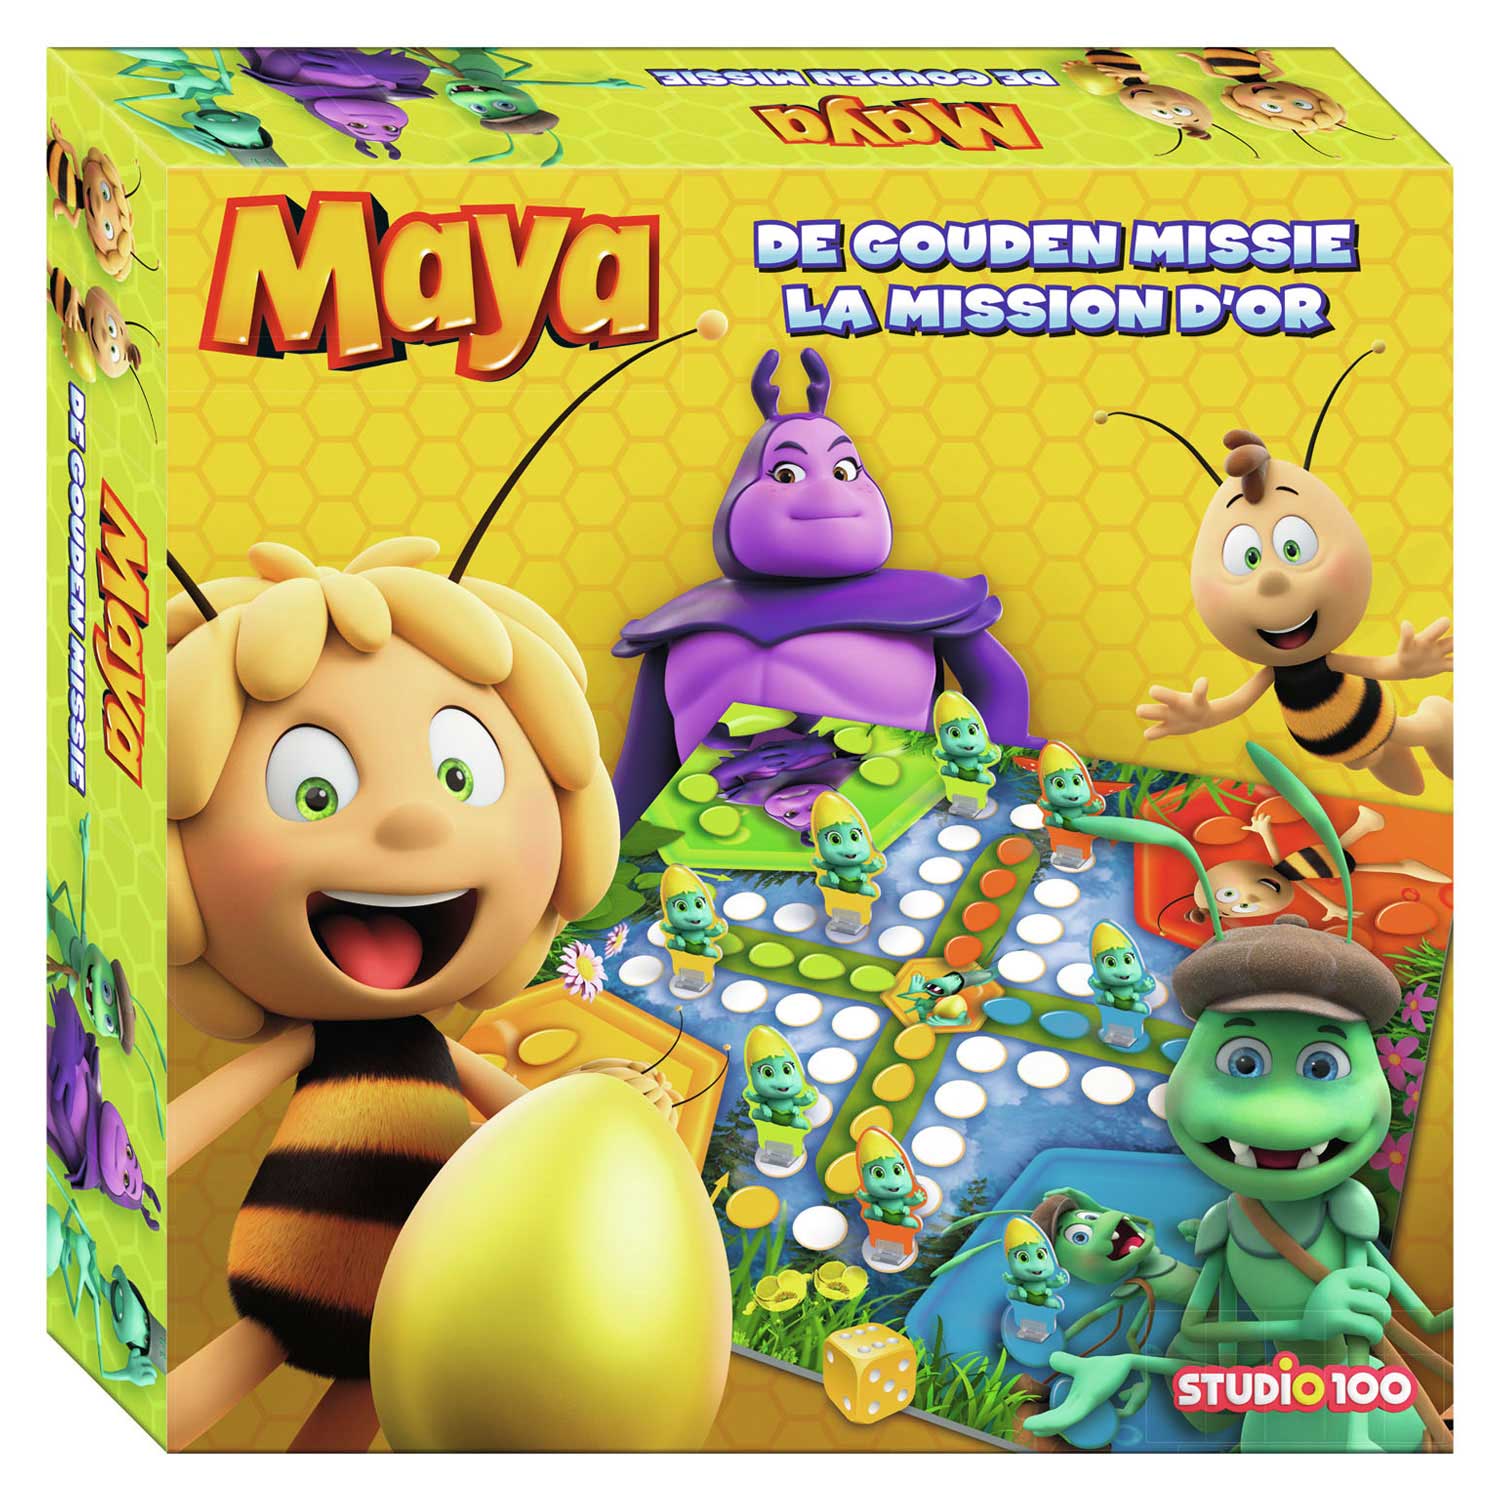 Maya the Bee Game - movie 3 | Thimble Toys